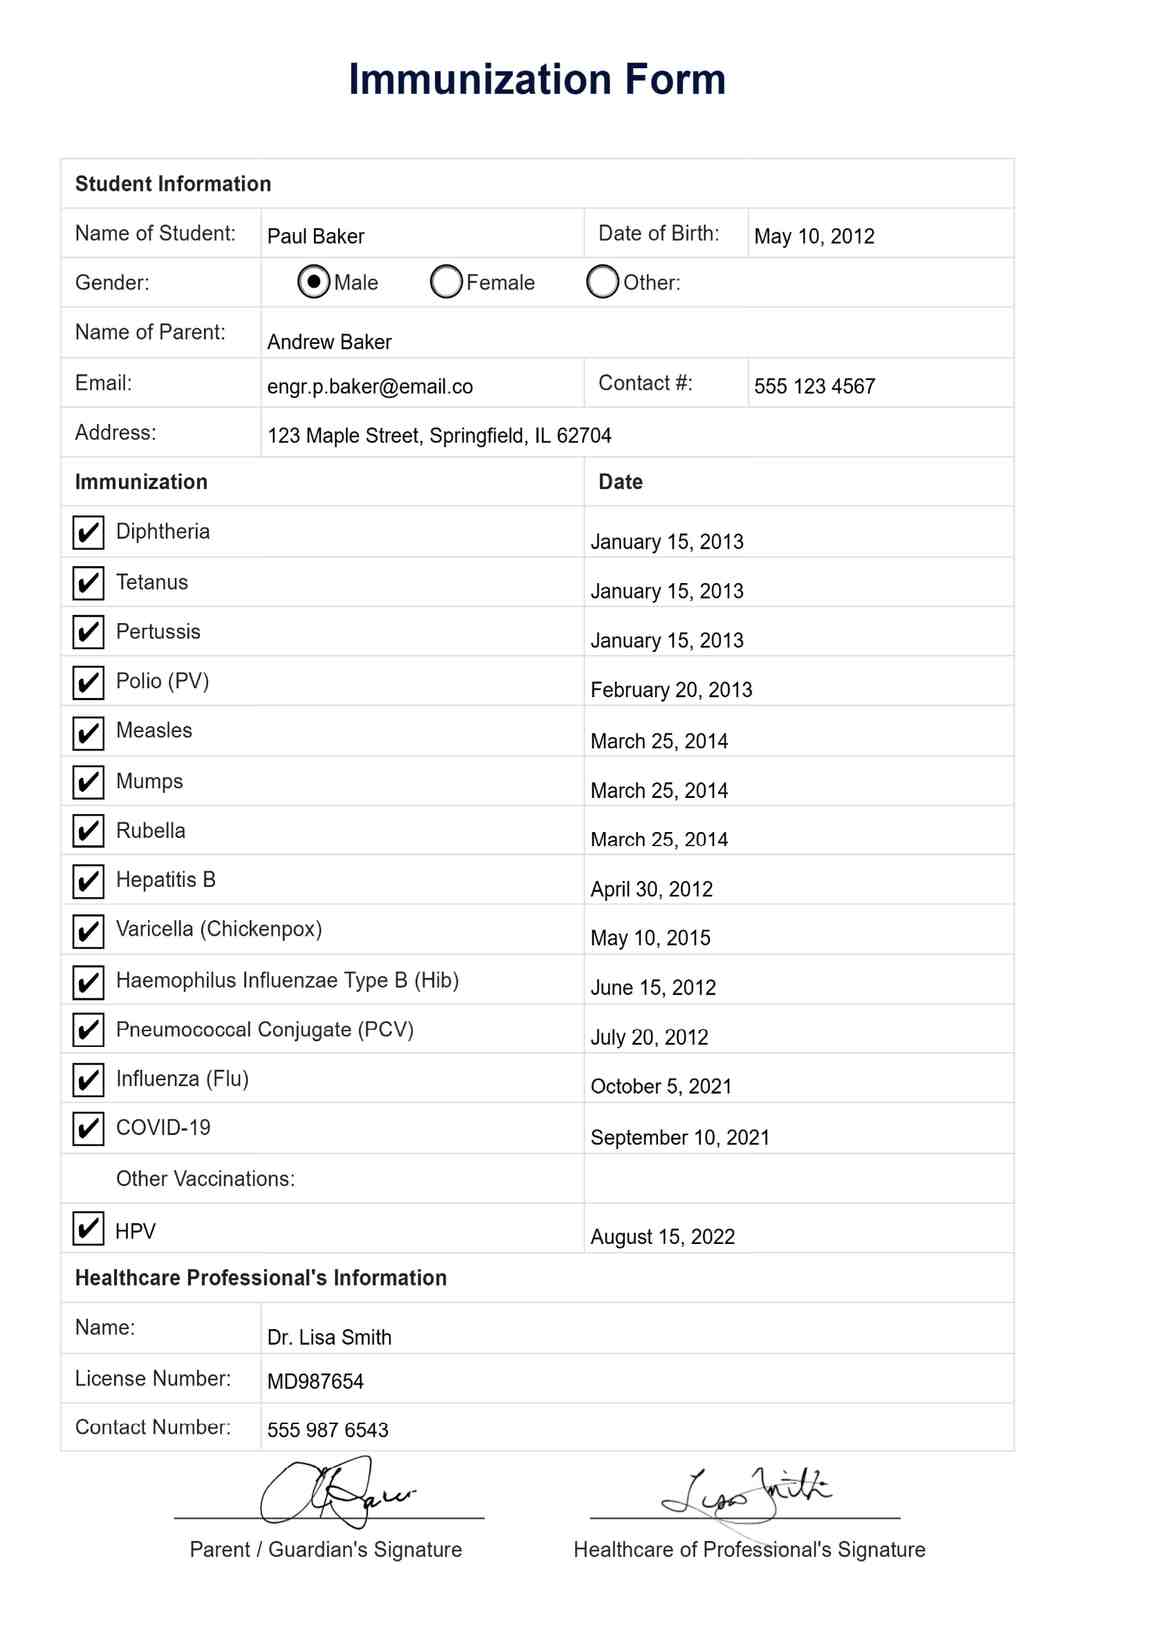 Immunization Form PDF Example